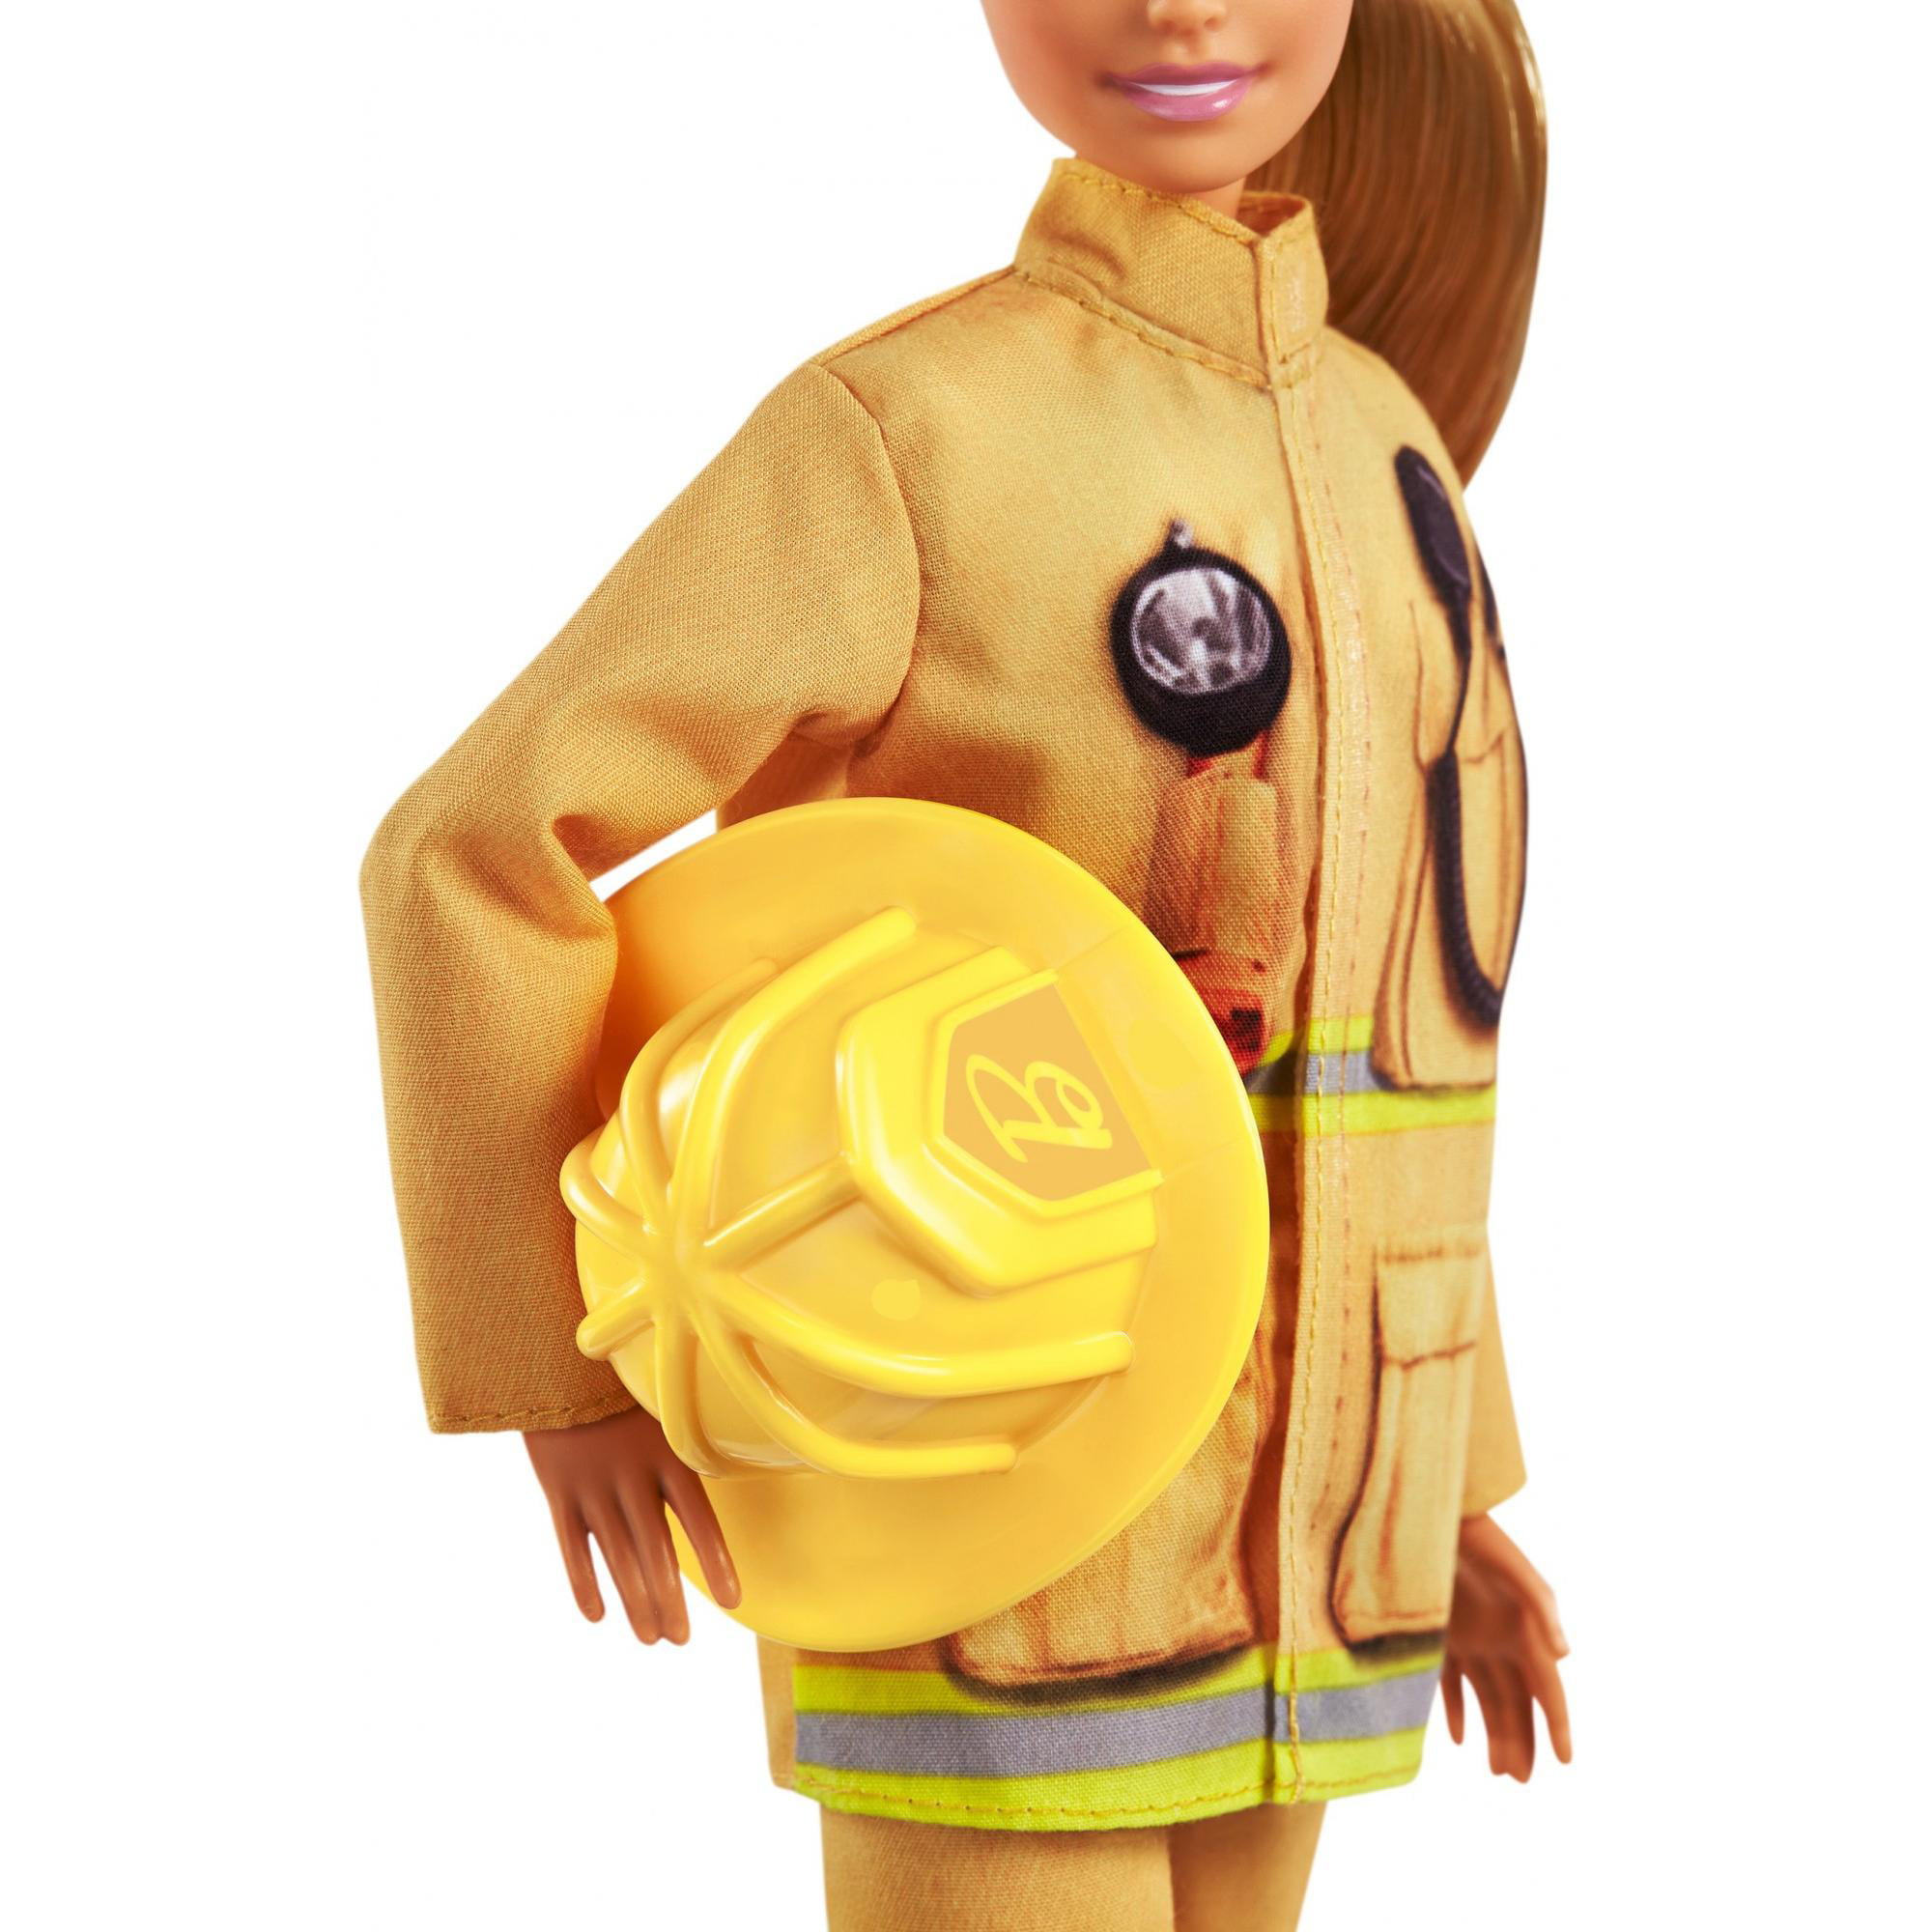 MATTEL Barbie Career Deluxe Doll Firefighter Accessories GTN83 